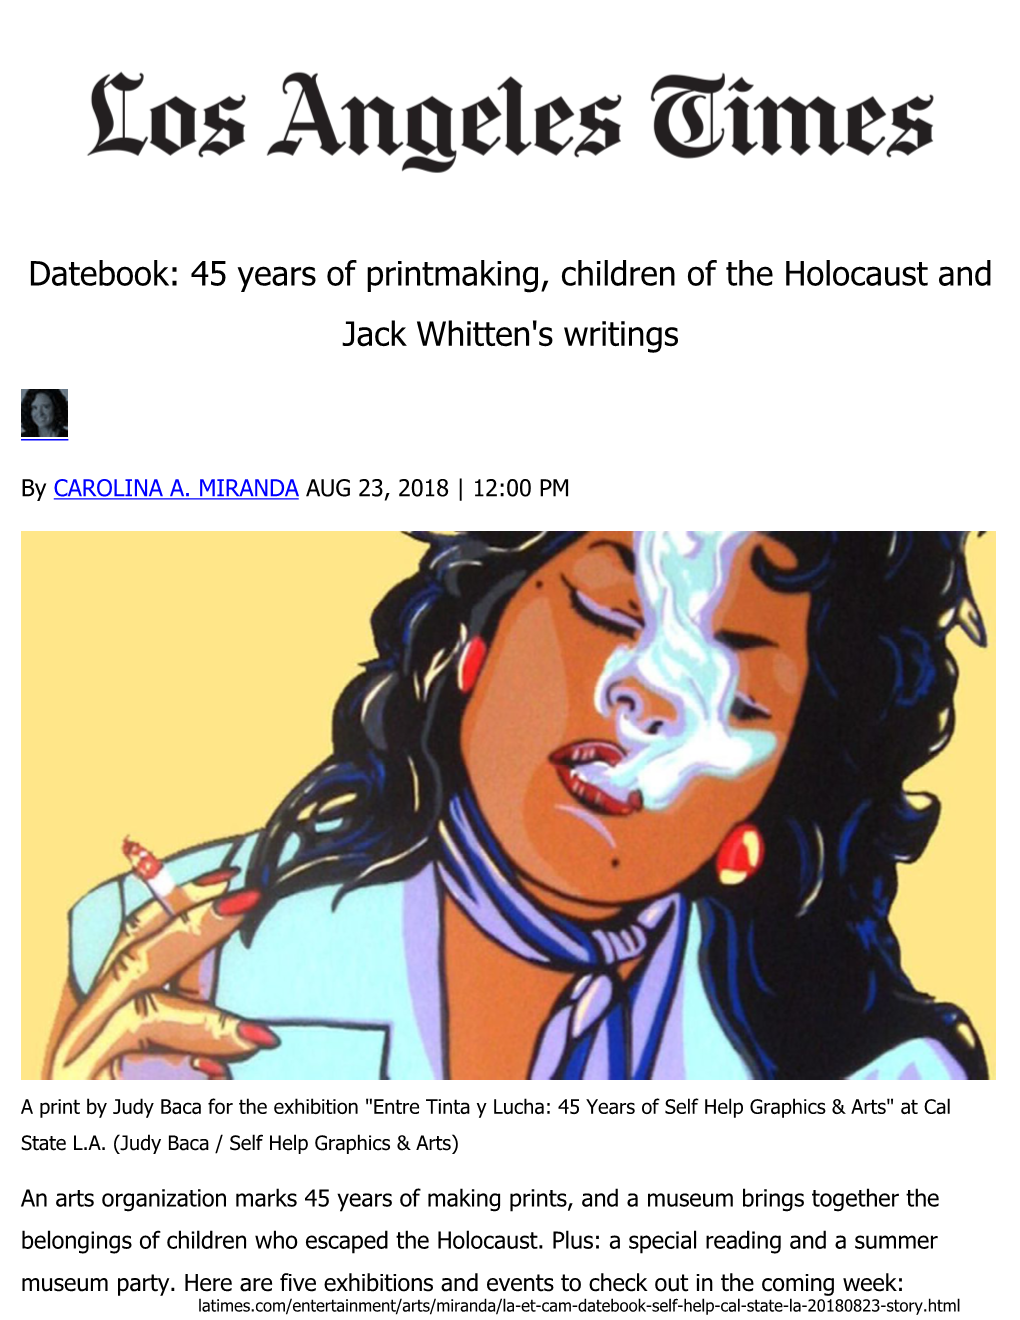 Datebook: 45 Years of Printmaking, Children of the Holocaust and Jack Whitten's Writings